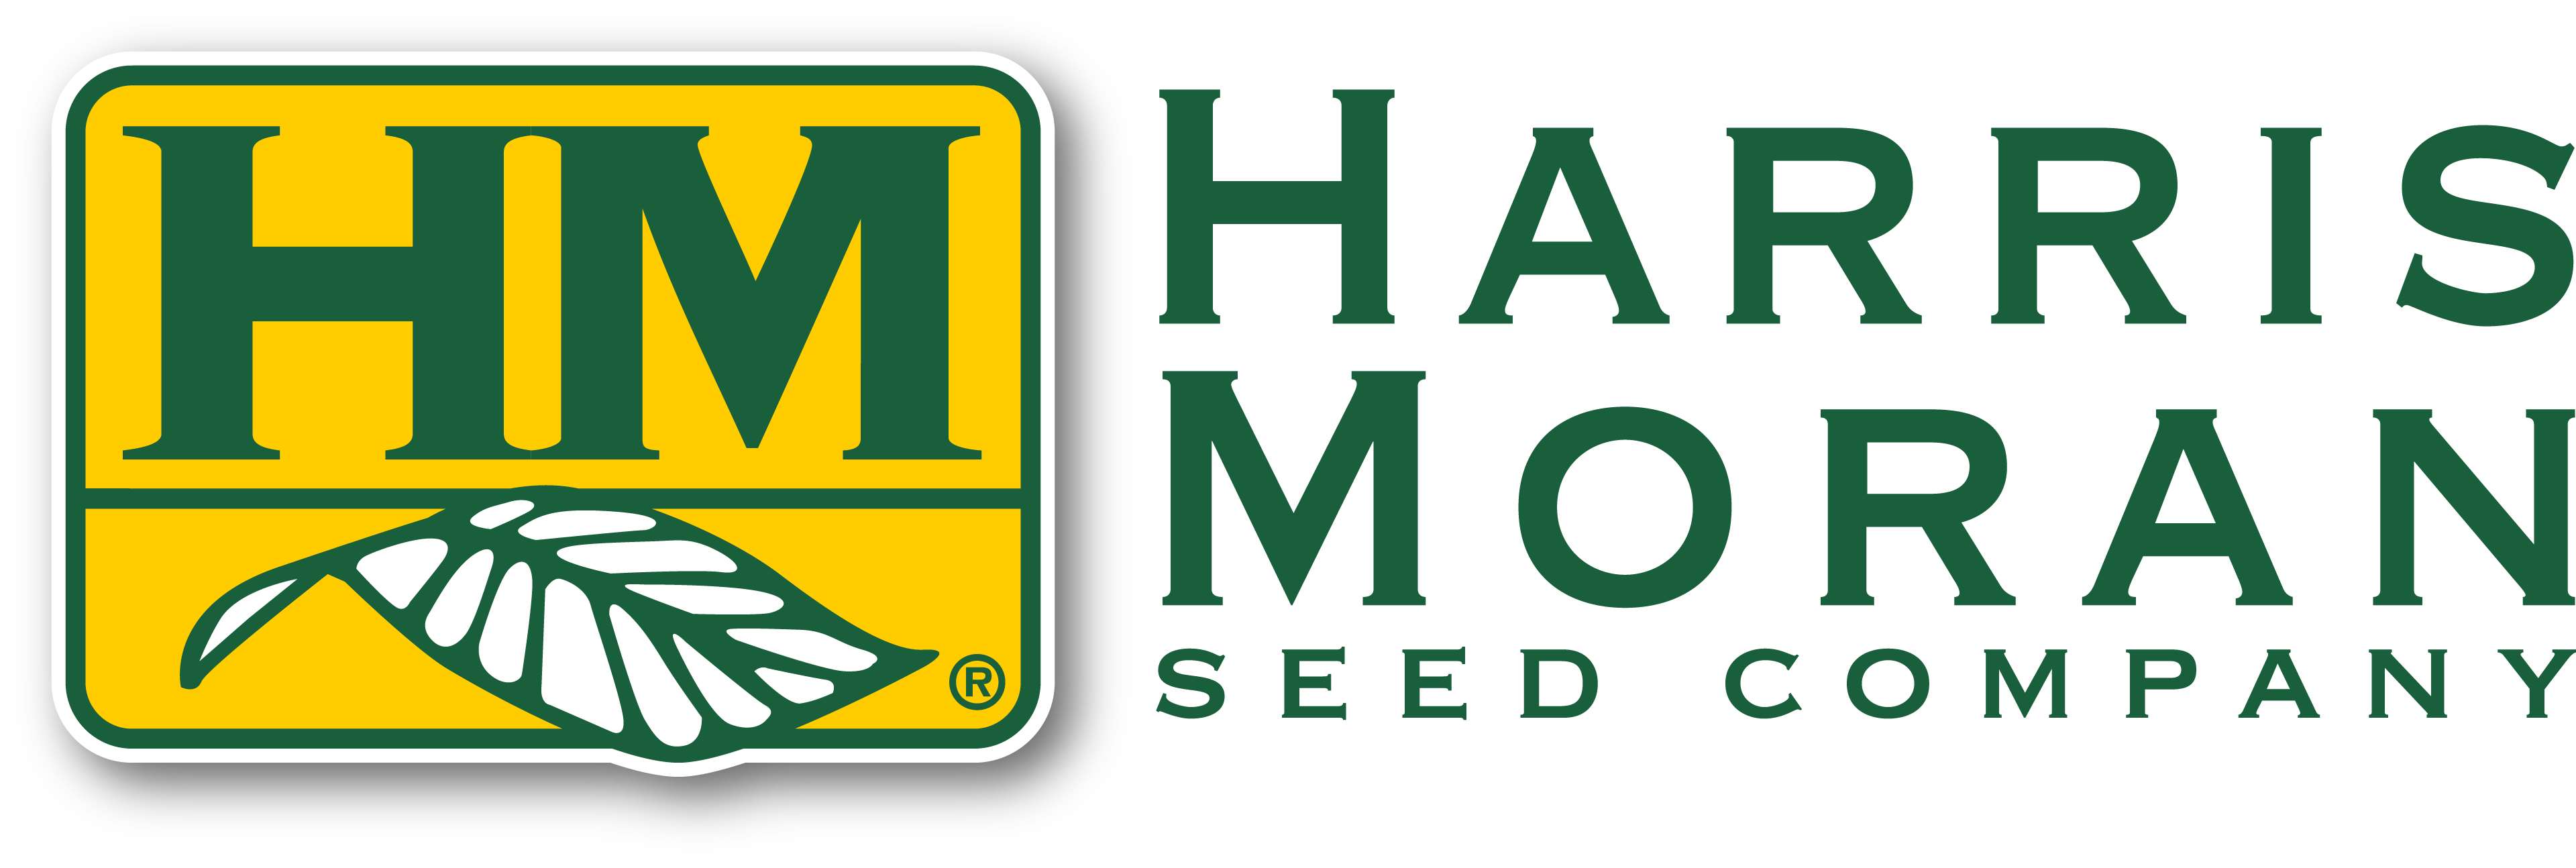 Harris-Moran Logo photo - 1